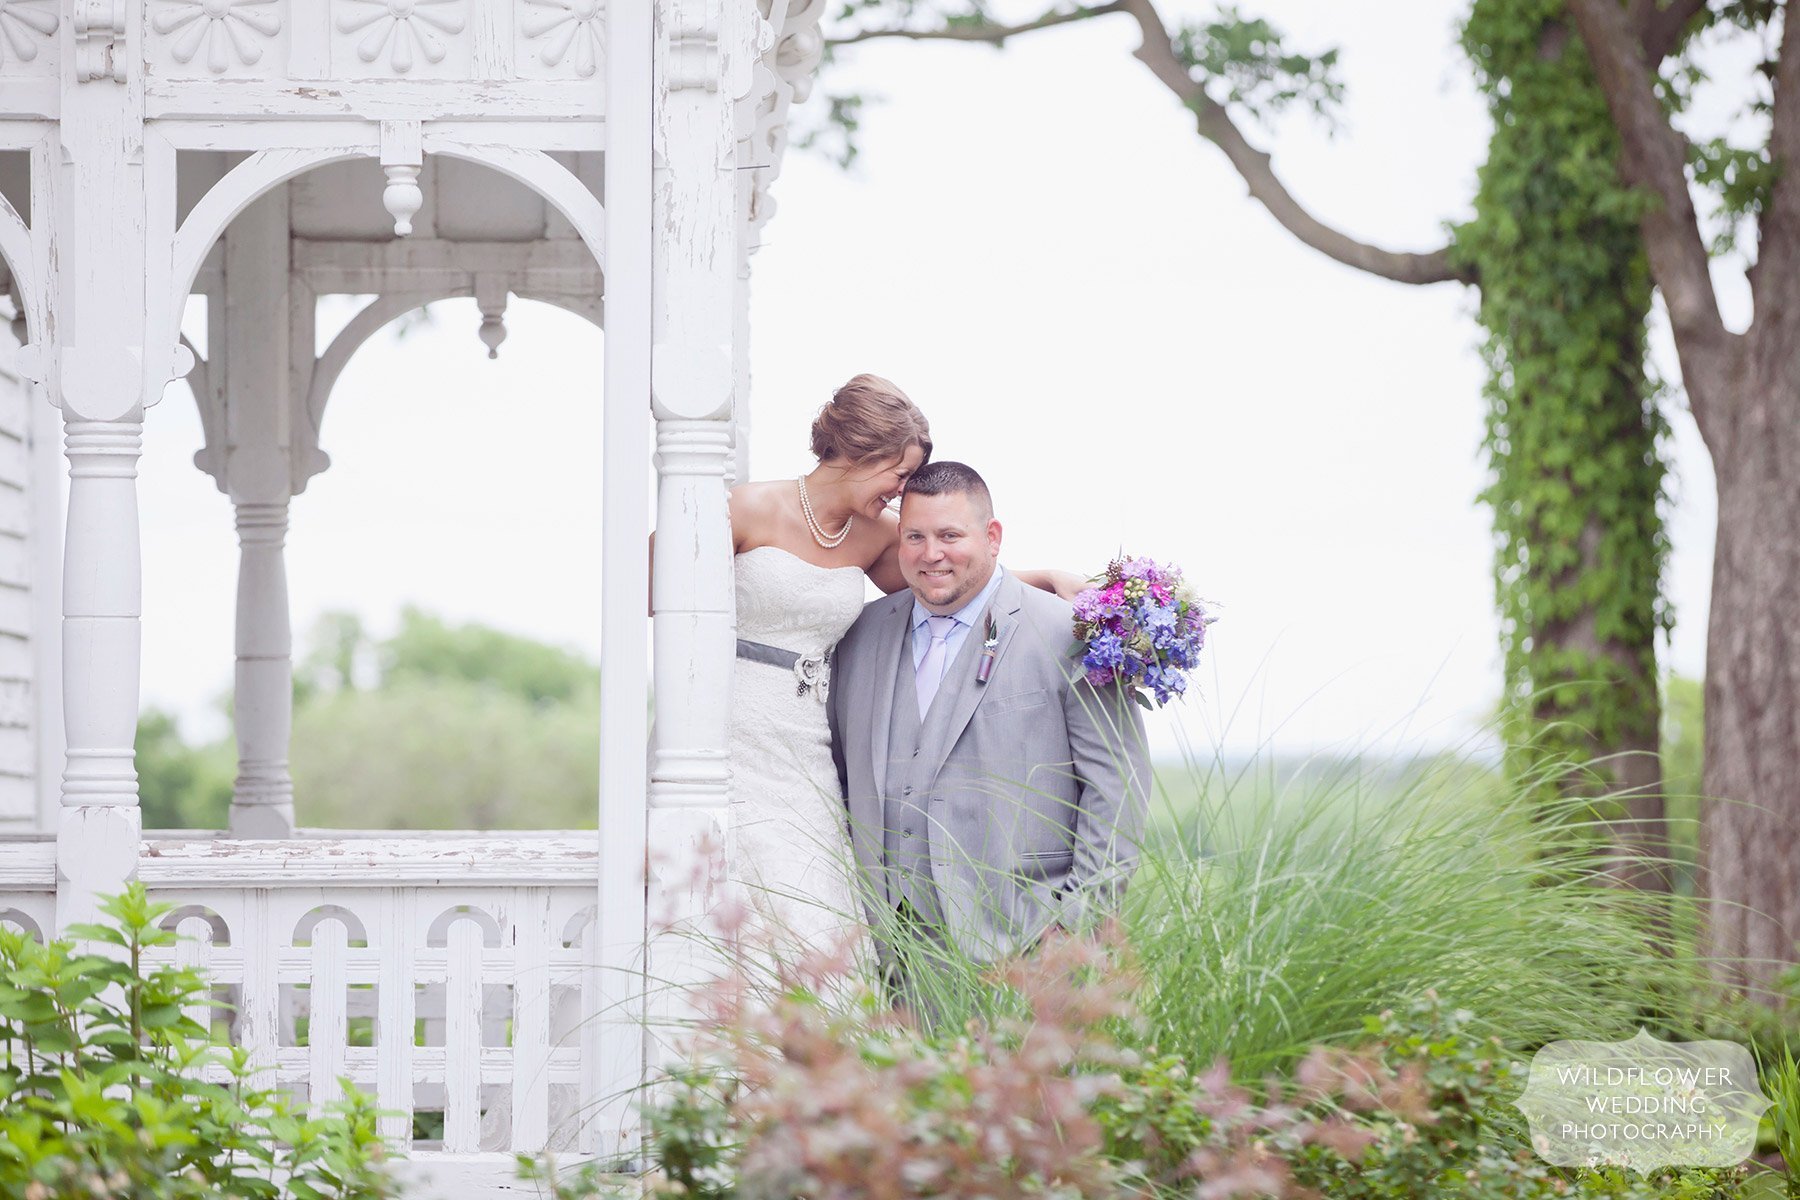 Rustic Farm Wedding Ceremony in Mid-Missouri – Heidi & Jeff